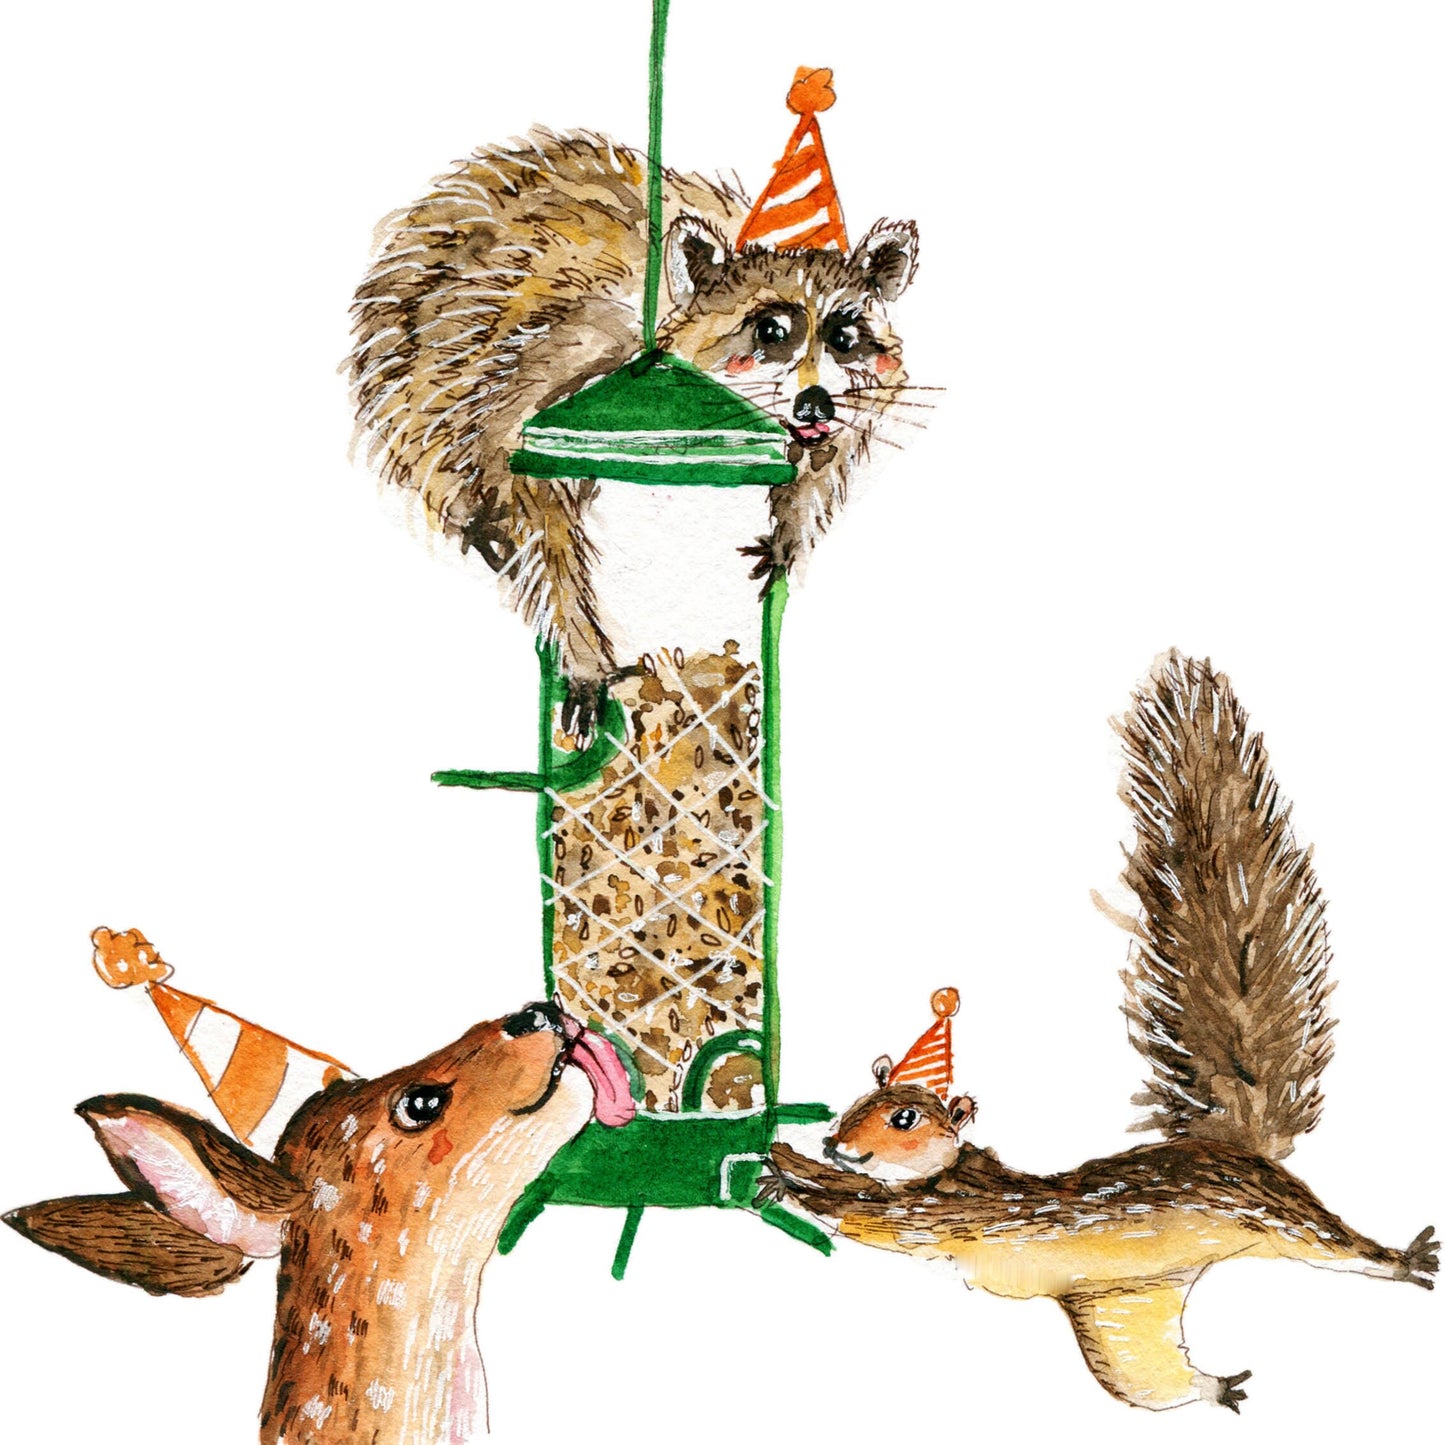 Bird Feeder Funny Birthday Cards For Bird Watching - Bird Birthday Card For Bird Lover - Nature Lover Squirrel Raccoon Deer - Liyana Studio